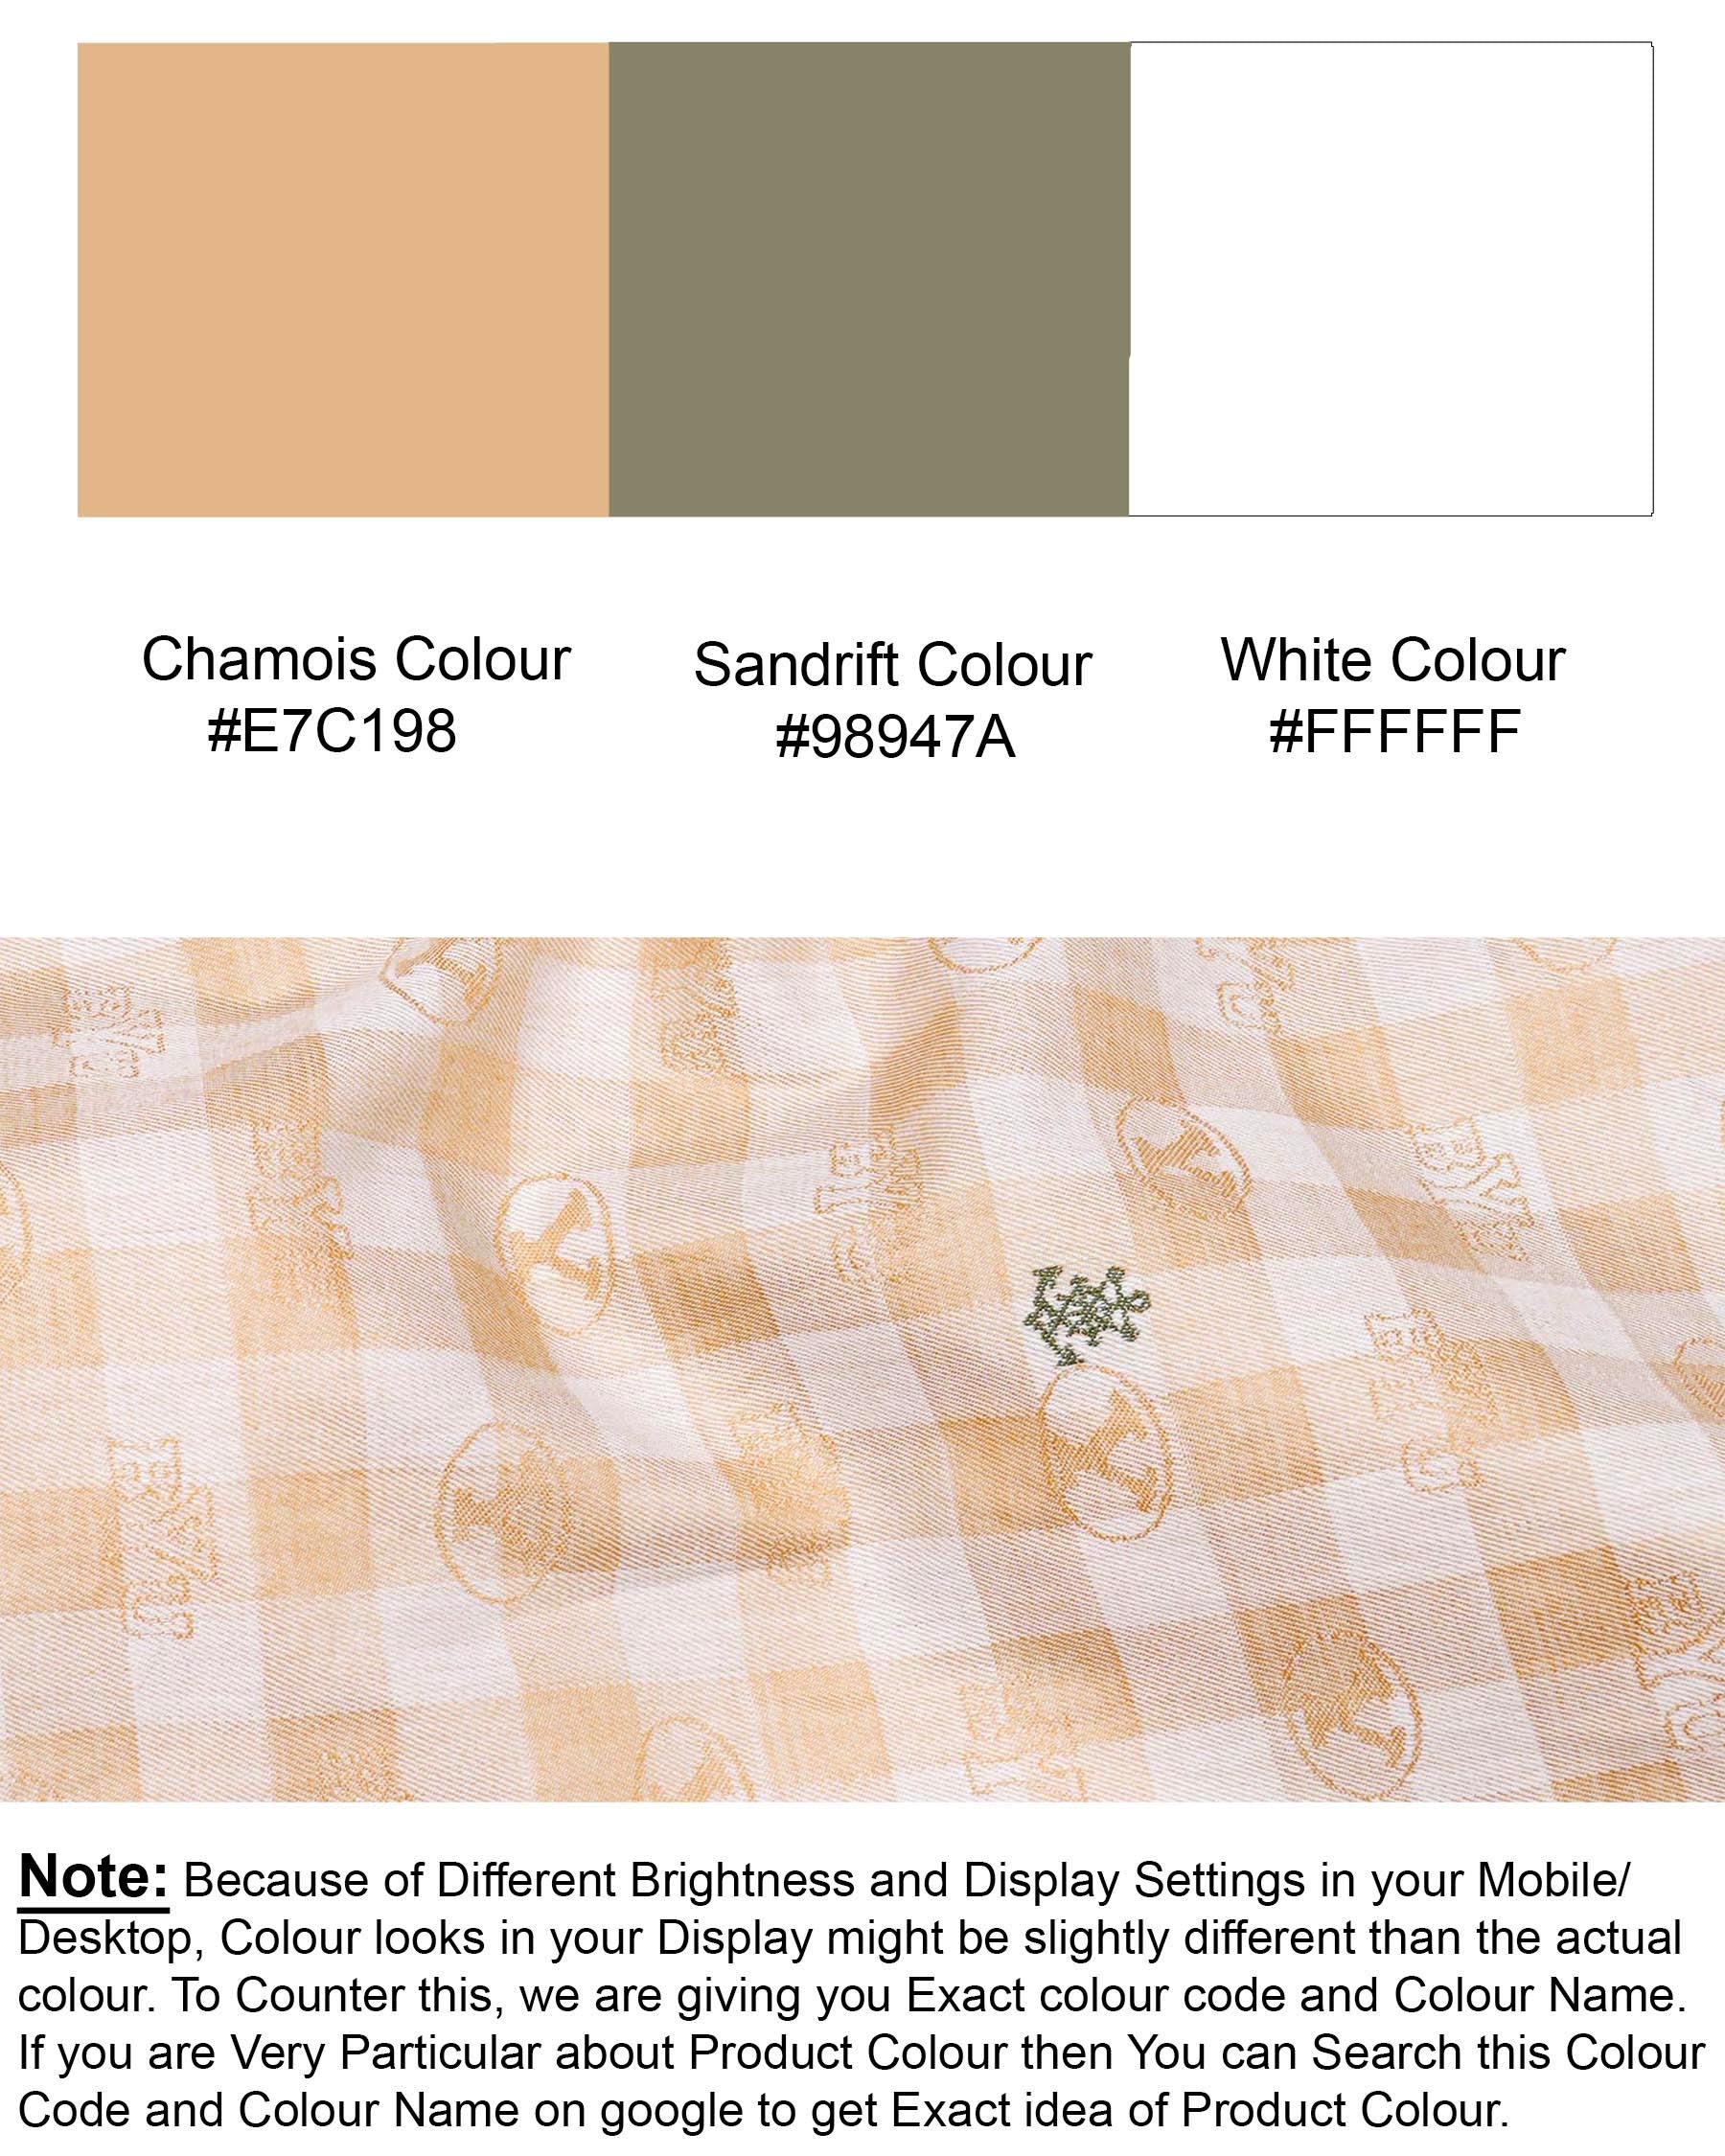 Chamois Peach and White Checkered Jacquard Textured Premium Giza Cotton Shirt 7517-CA-38, 7517-CA-H-38, 7517-CA-39, 7517-CA-H-39, 7517-CA-40, 7517-CA-H-40, 7517-CA-42, 7517-CA-H-42, 7517-CA-44, 7517-CA-H-44, 7517-CA-46, 7517-CA-H-46, 7517-CA-48, 7517-CA-H-48, 7517-CA-50, 7517-CA-H-50, 7517-CA-52, 7517-CA-H-52